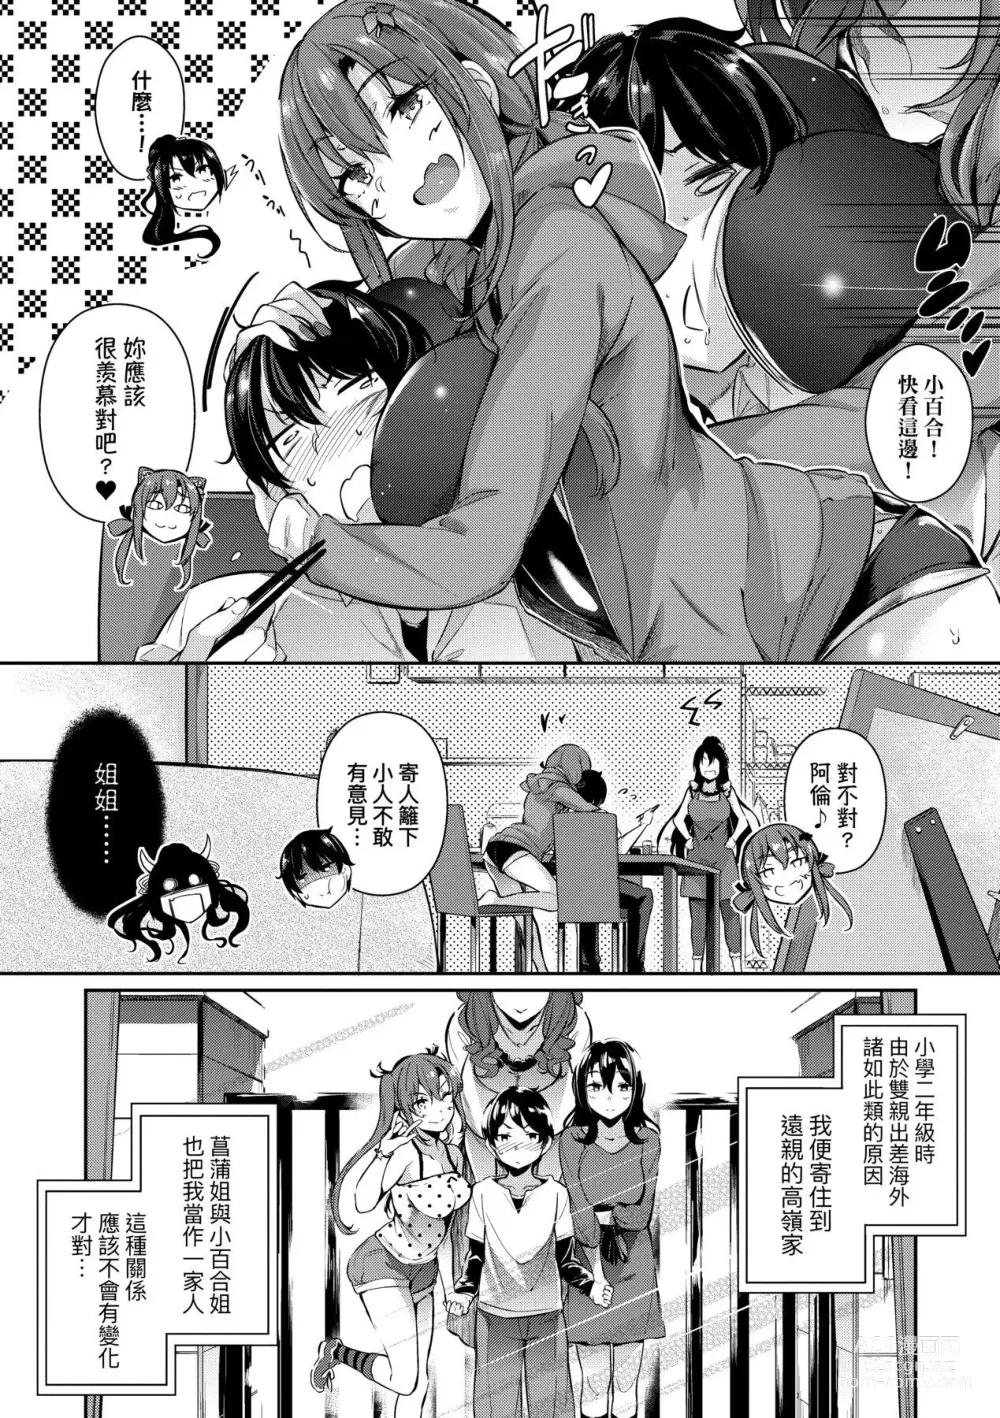 Page 17 of manga Garden 戀乳花園 特裝版 +ampoule『0』 +2特典